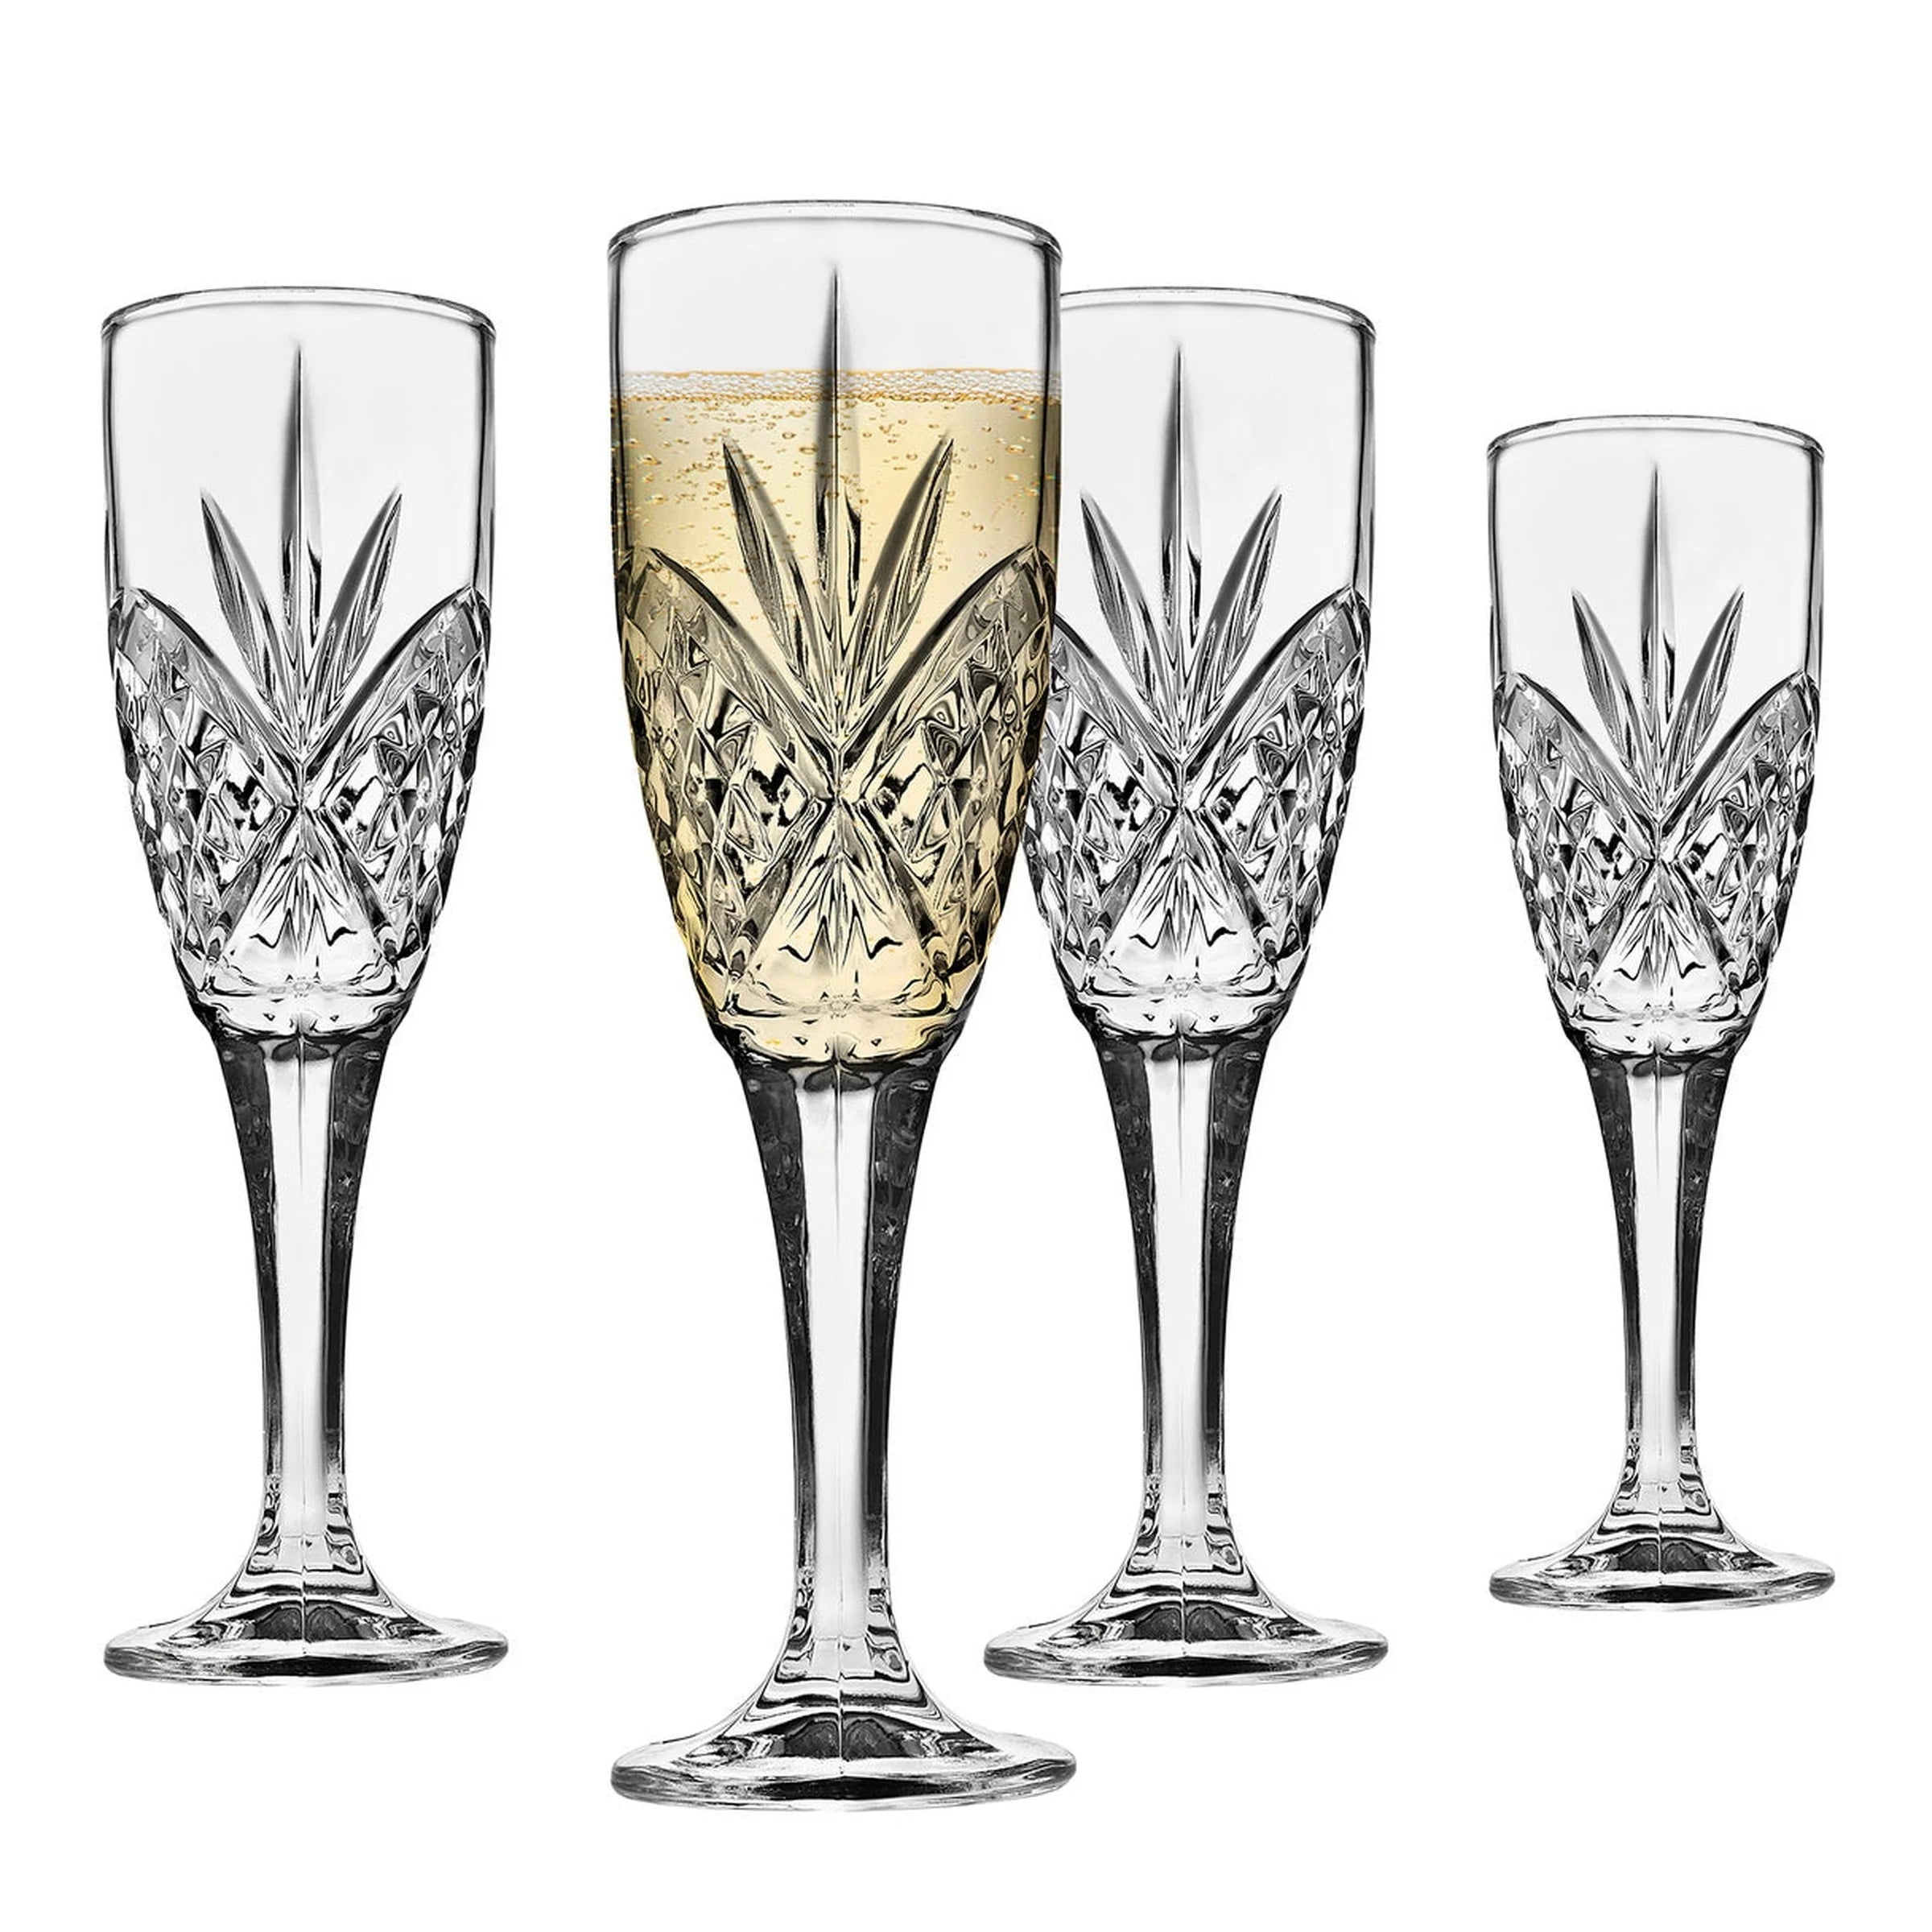 Spode Kingsley Champagne Flute Set of 4 Glassware 